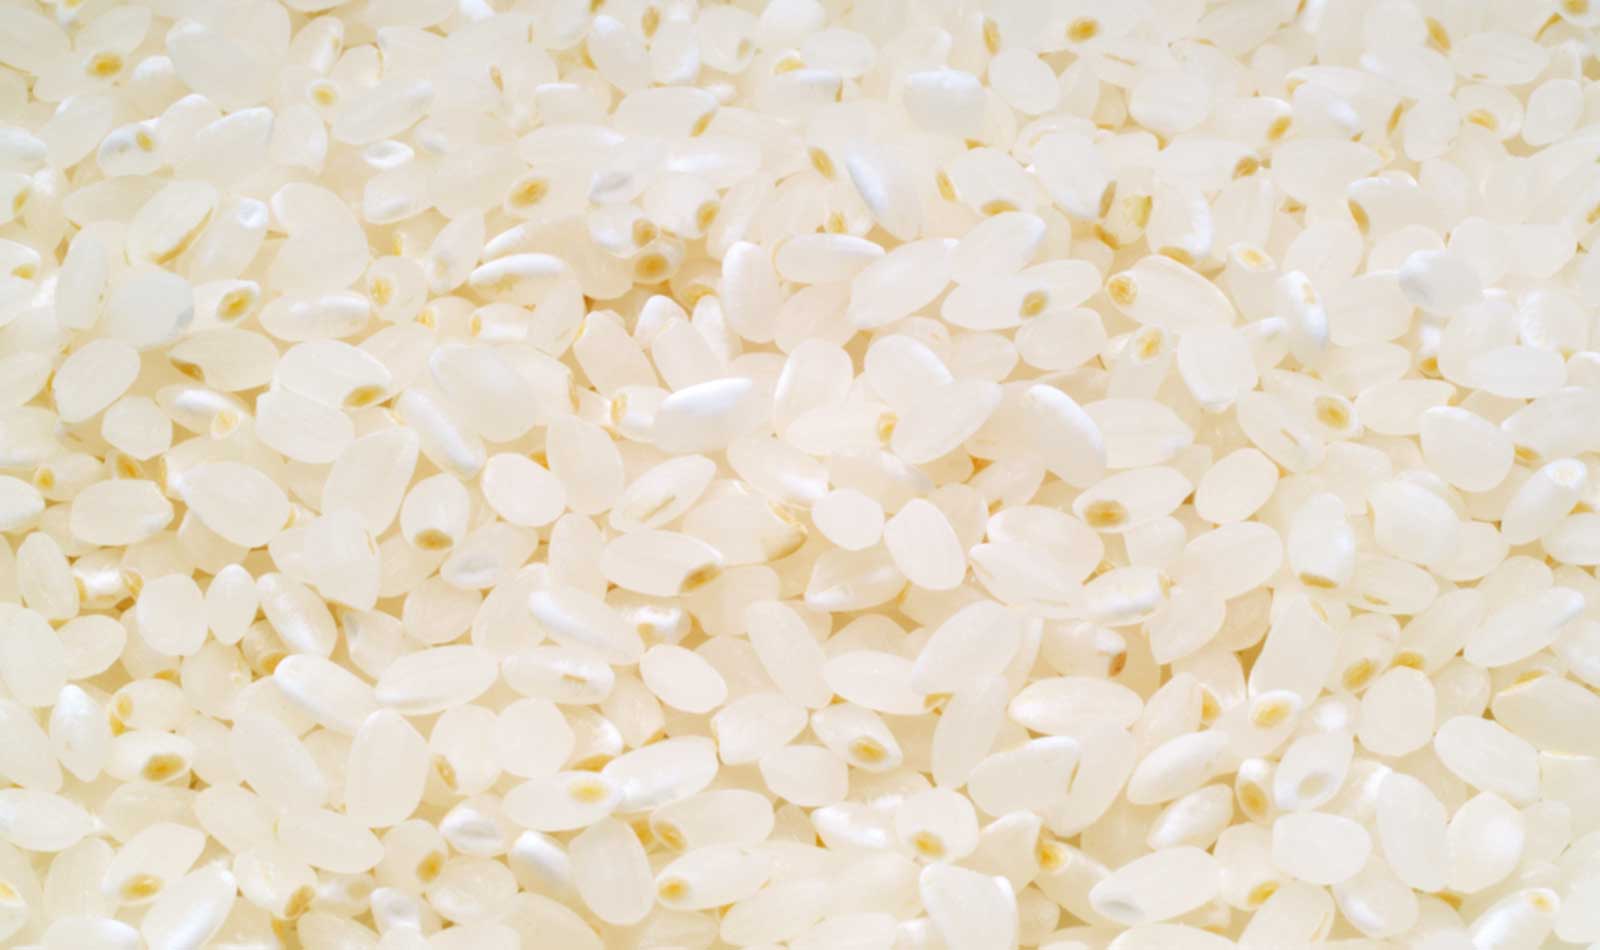 Splurge: Kinmemai Premium is the world’s most expensive rice at S$148 per kilo